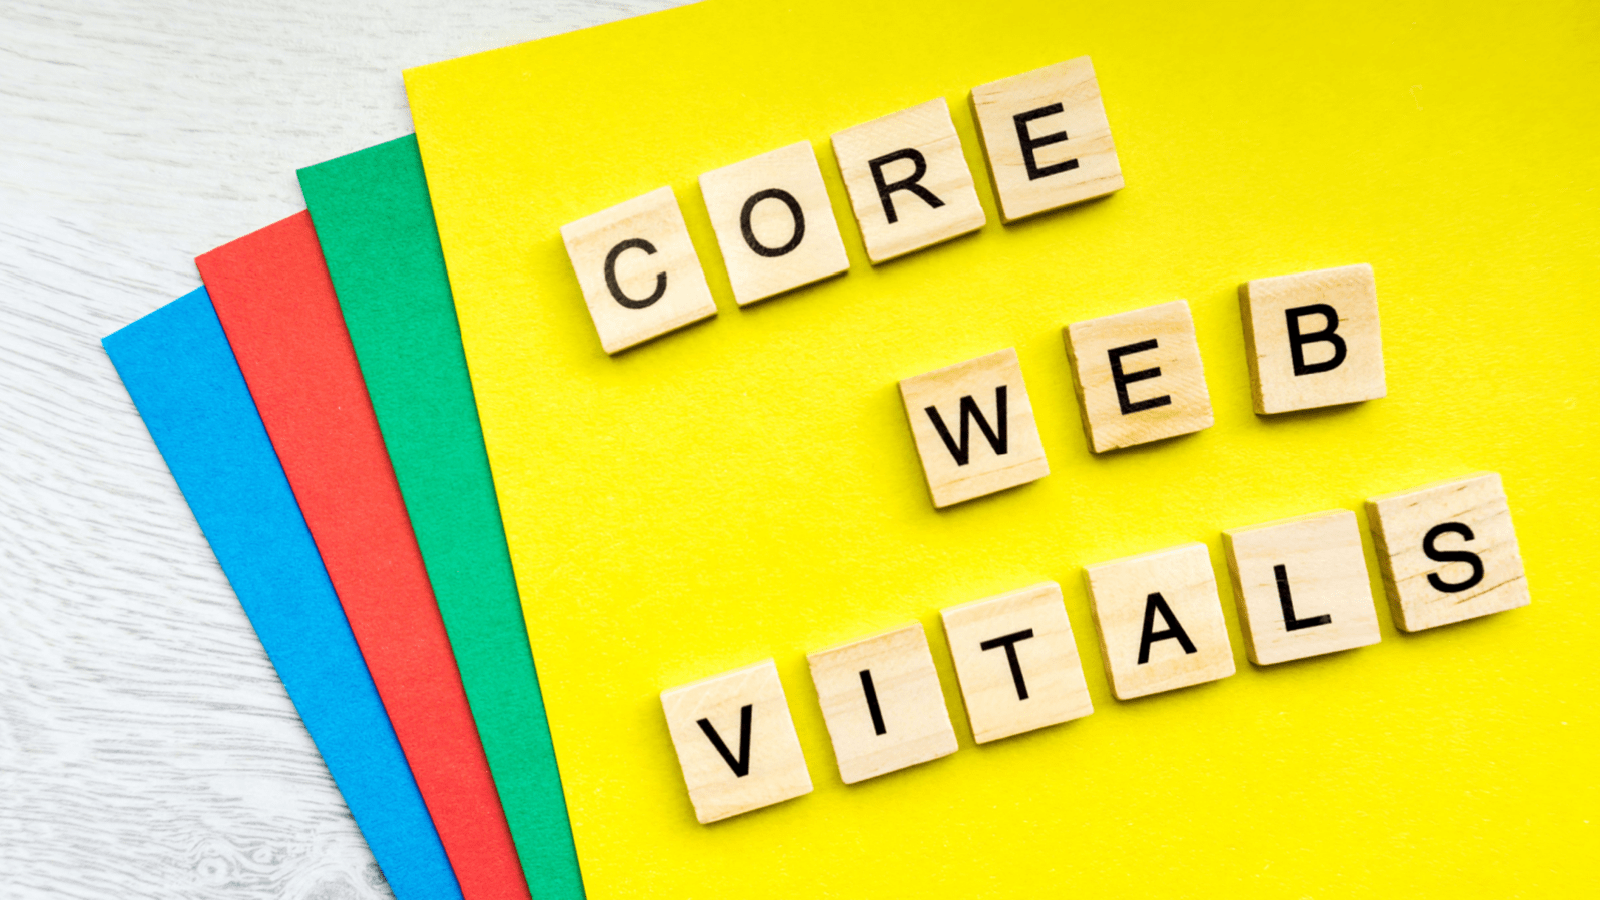 Core web vitals tips for SEO developers